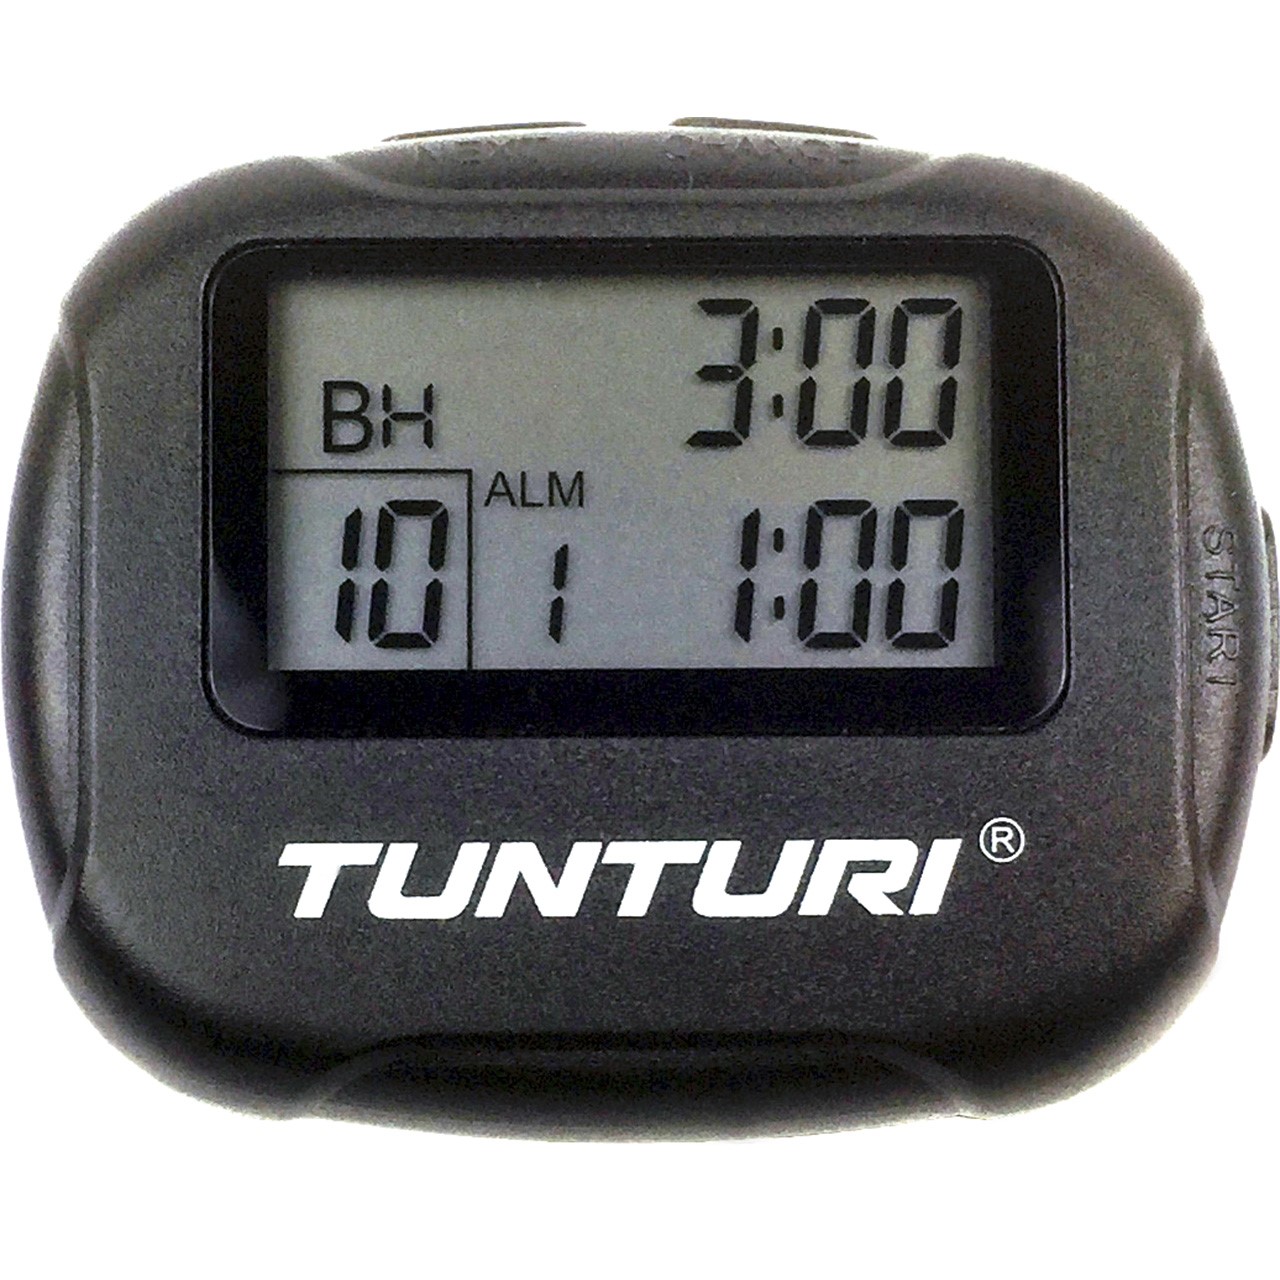 Tunturi Interval Timer And Stopwatch